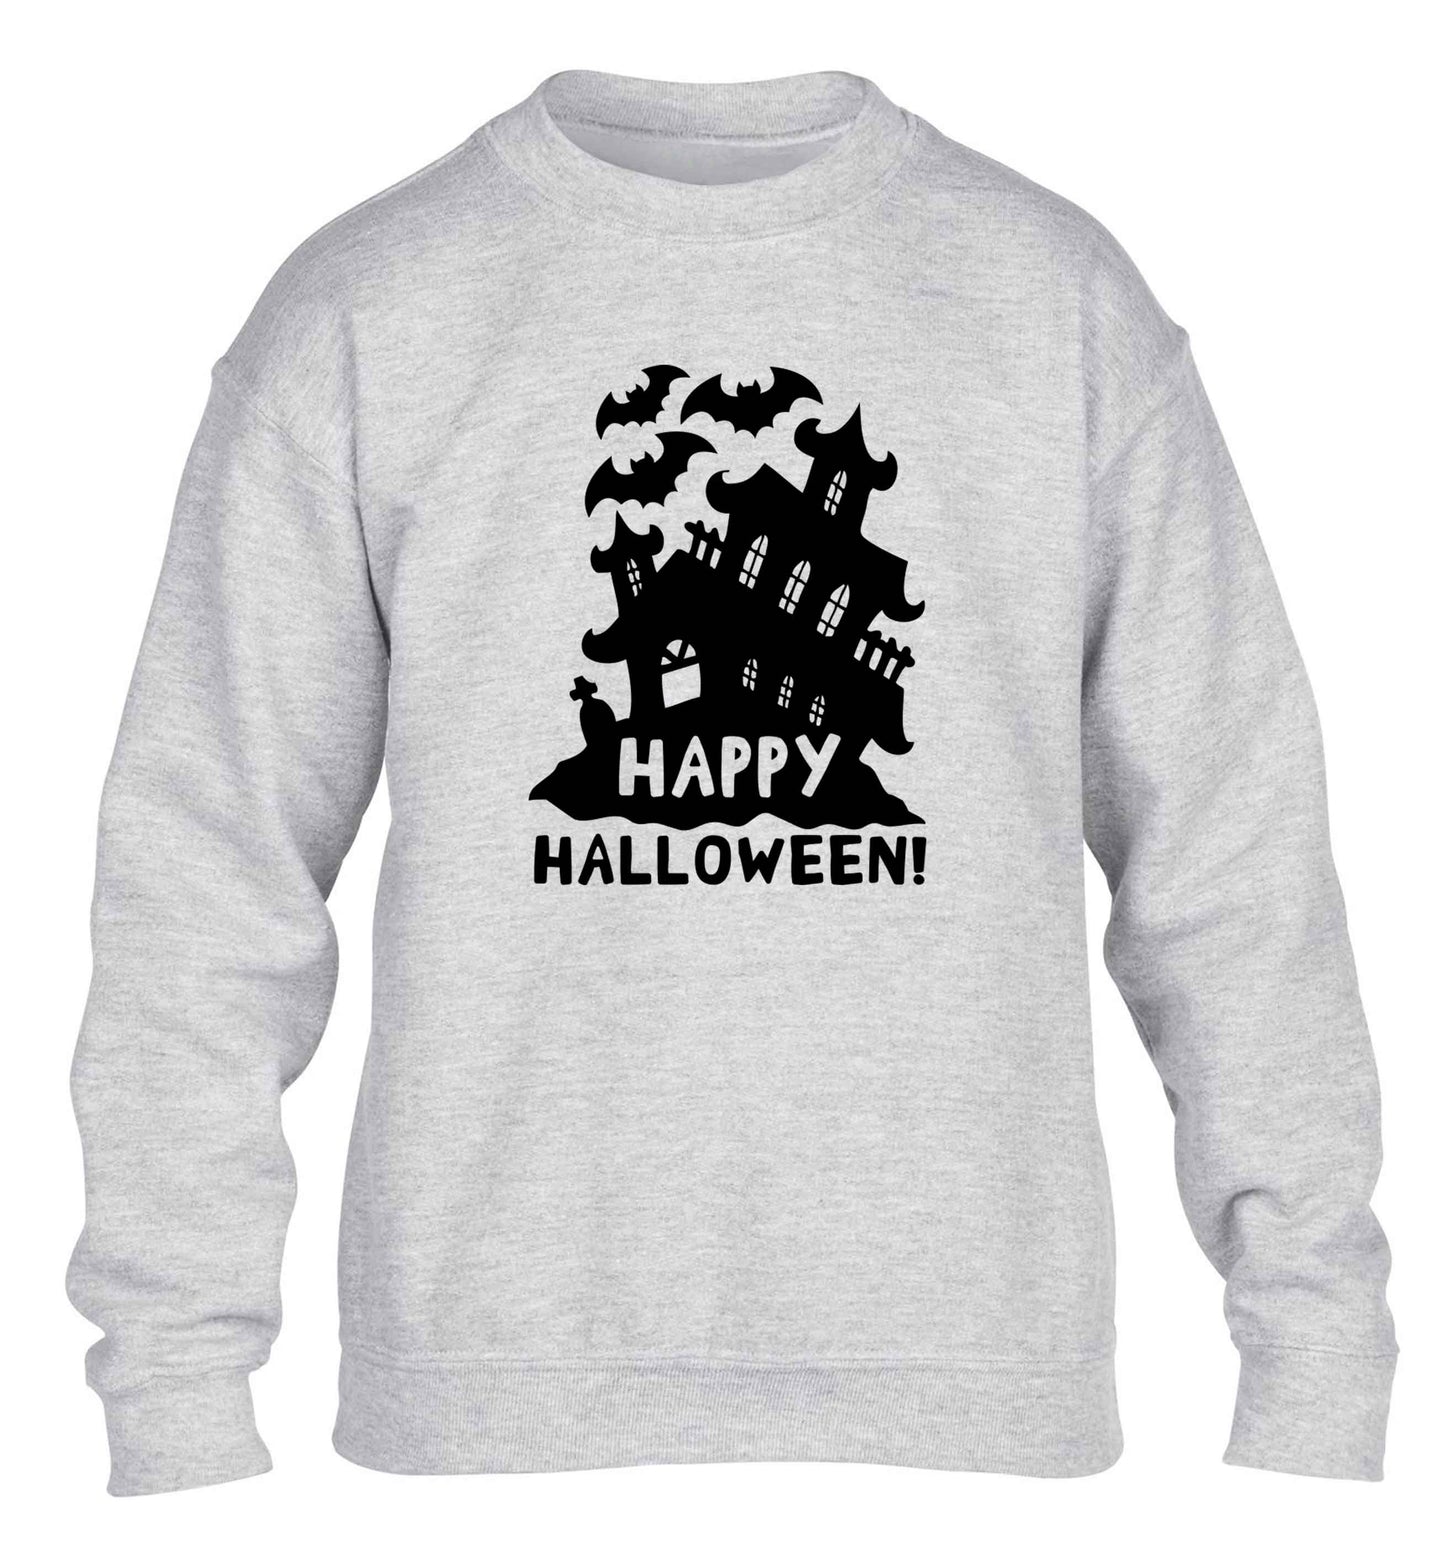 Happy halloween - haunted house children's grey sweater 12-13 Years